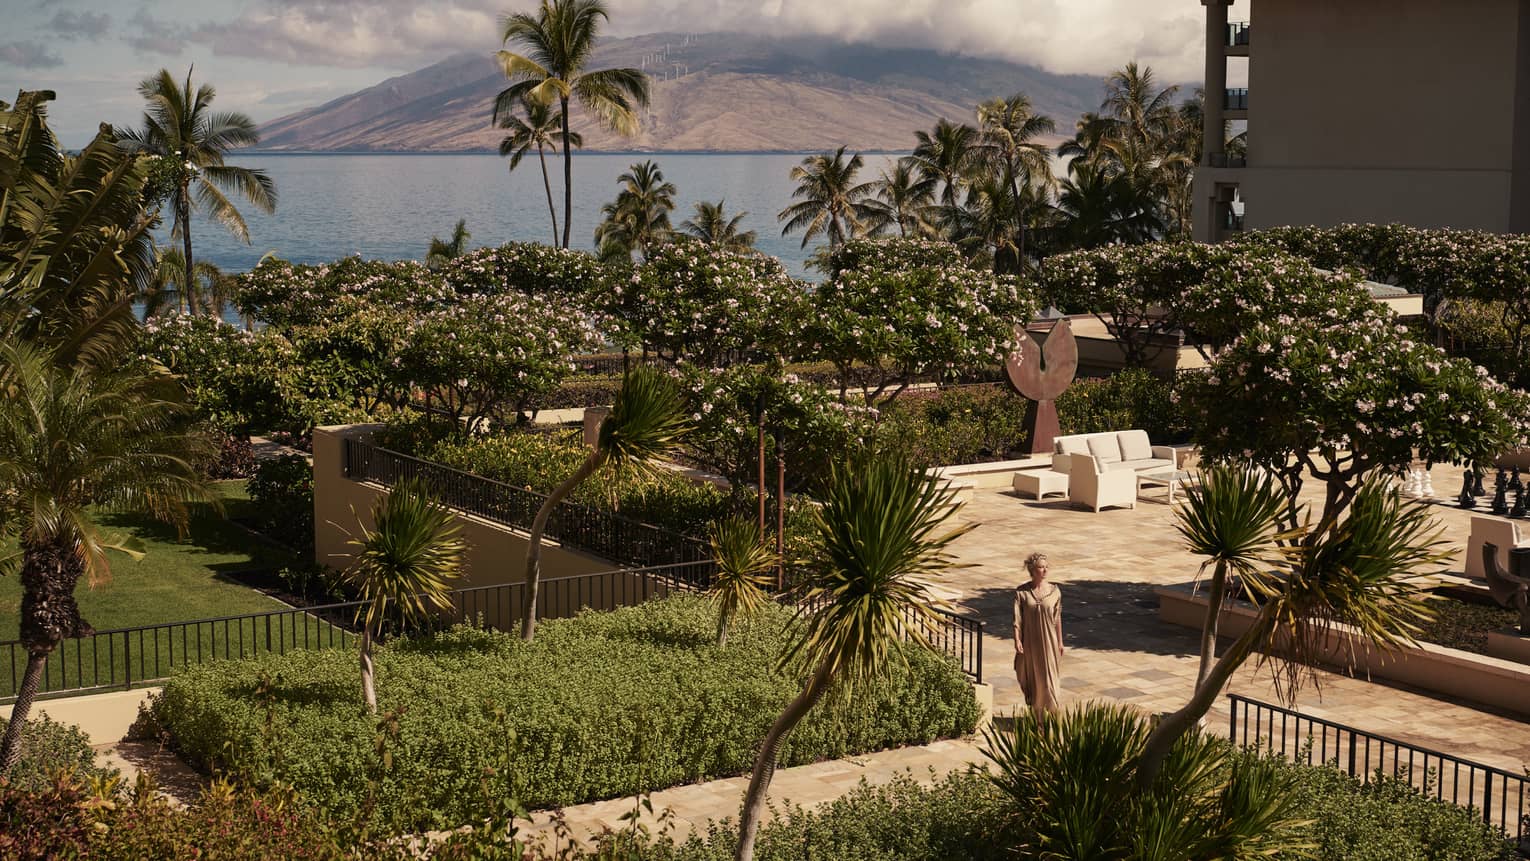 Woman walks through gardens on resort grounds in Maui, ocean in background